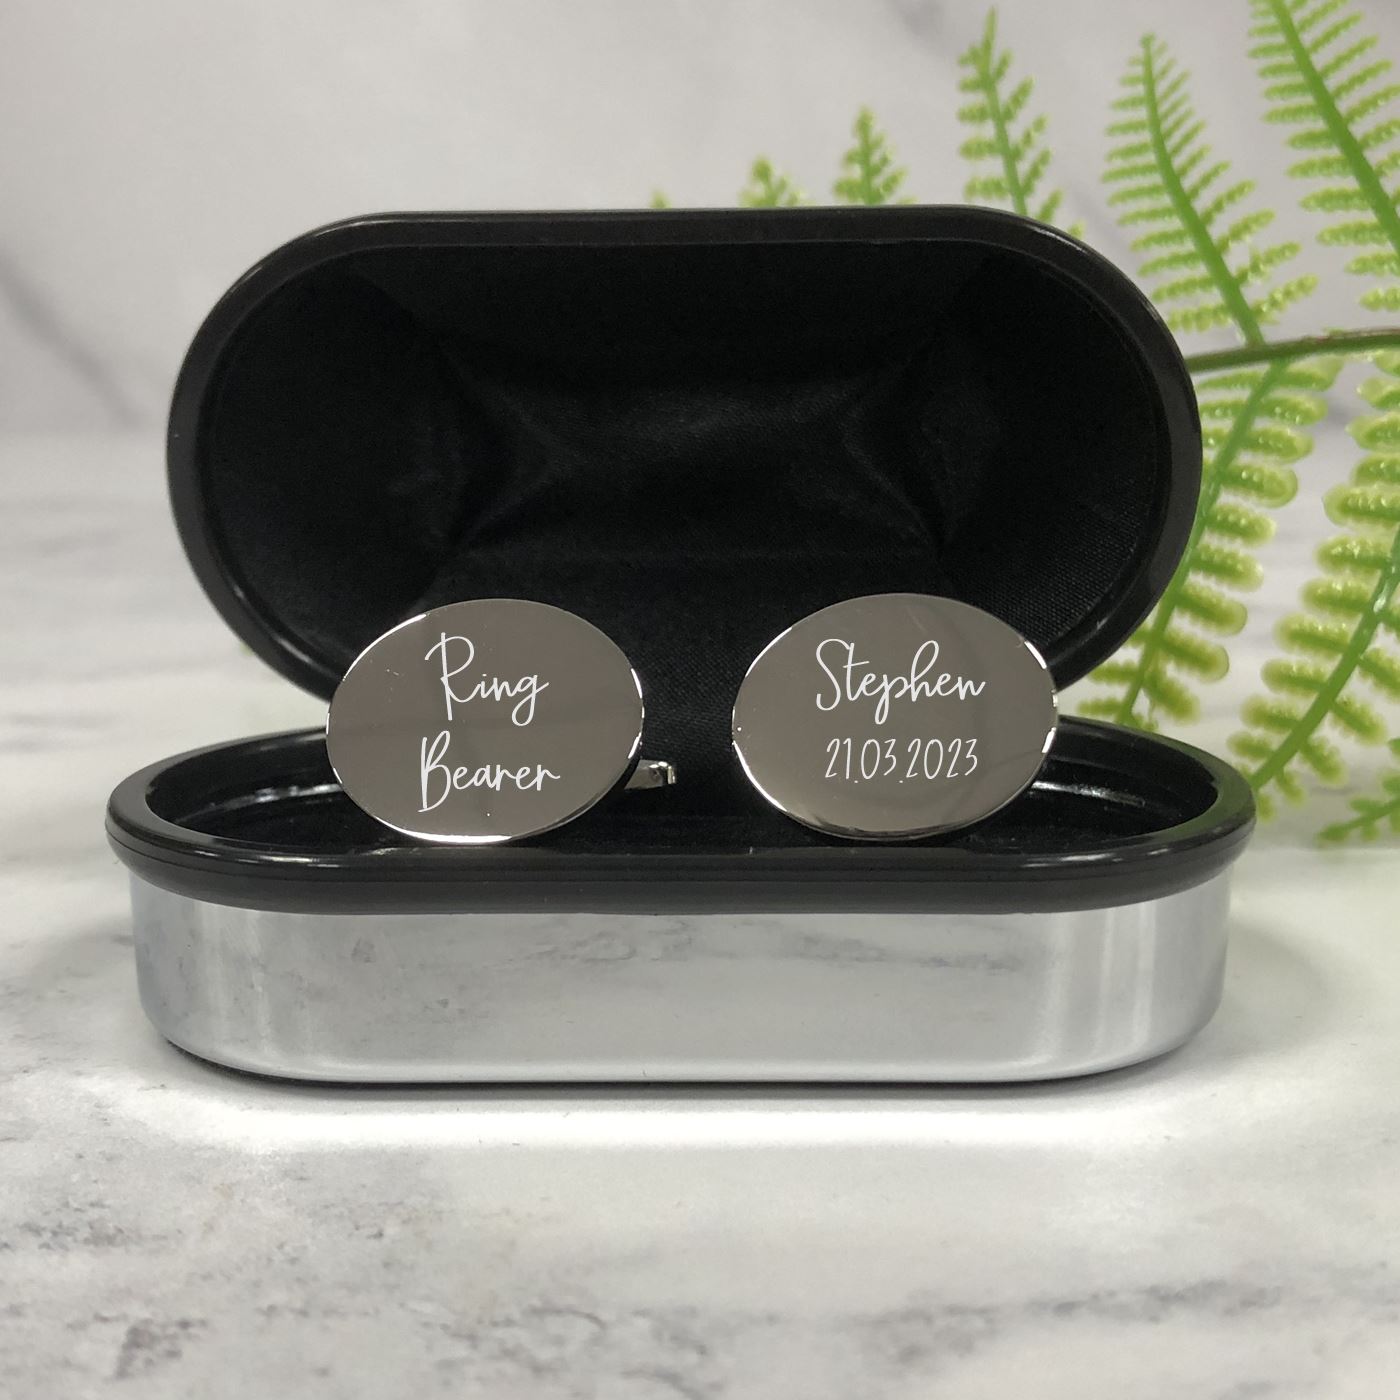 Engraved Wedding Day Oval Cufflinks - Ring Bearer